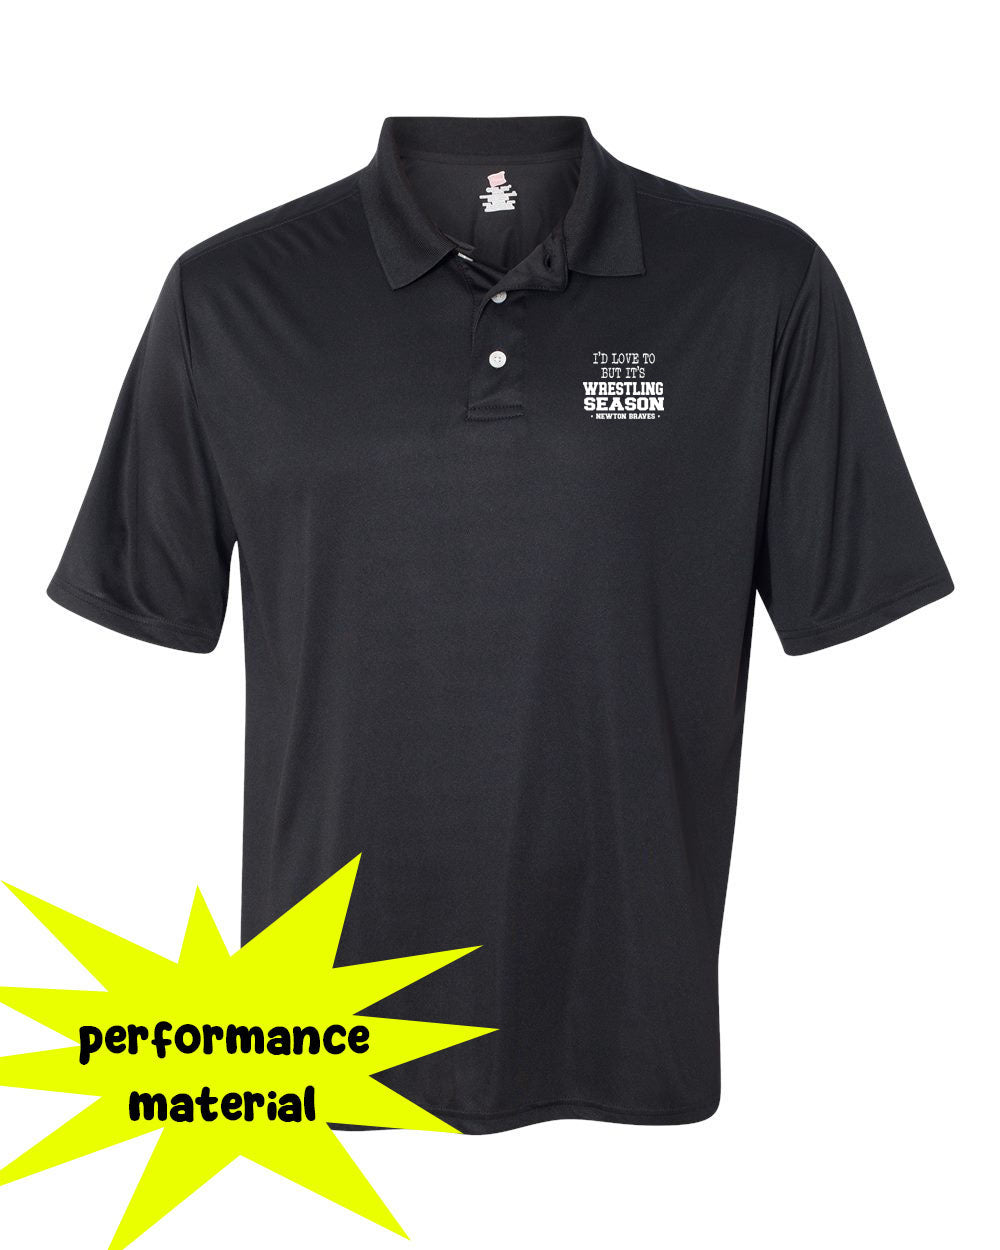 Newton Wrestling Performance Material Polo T-Shirt Design 10